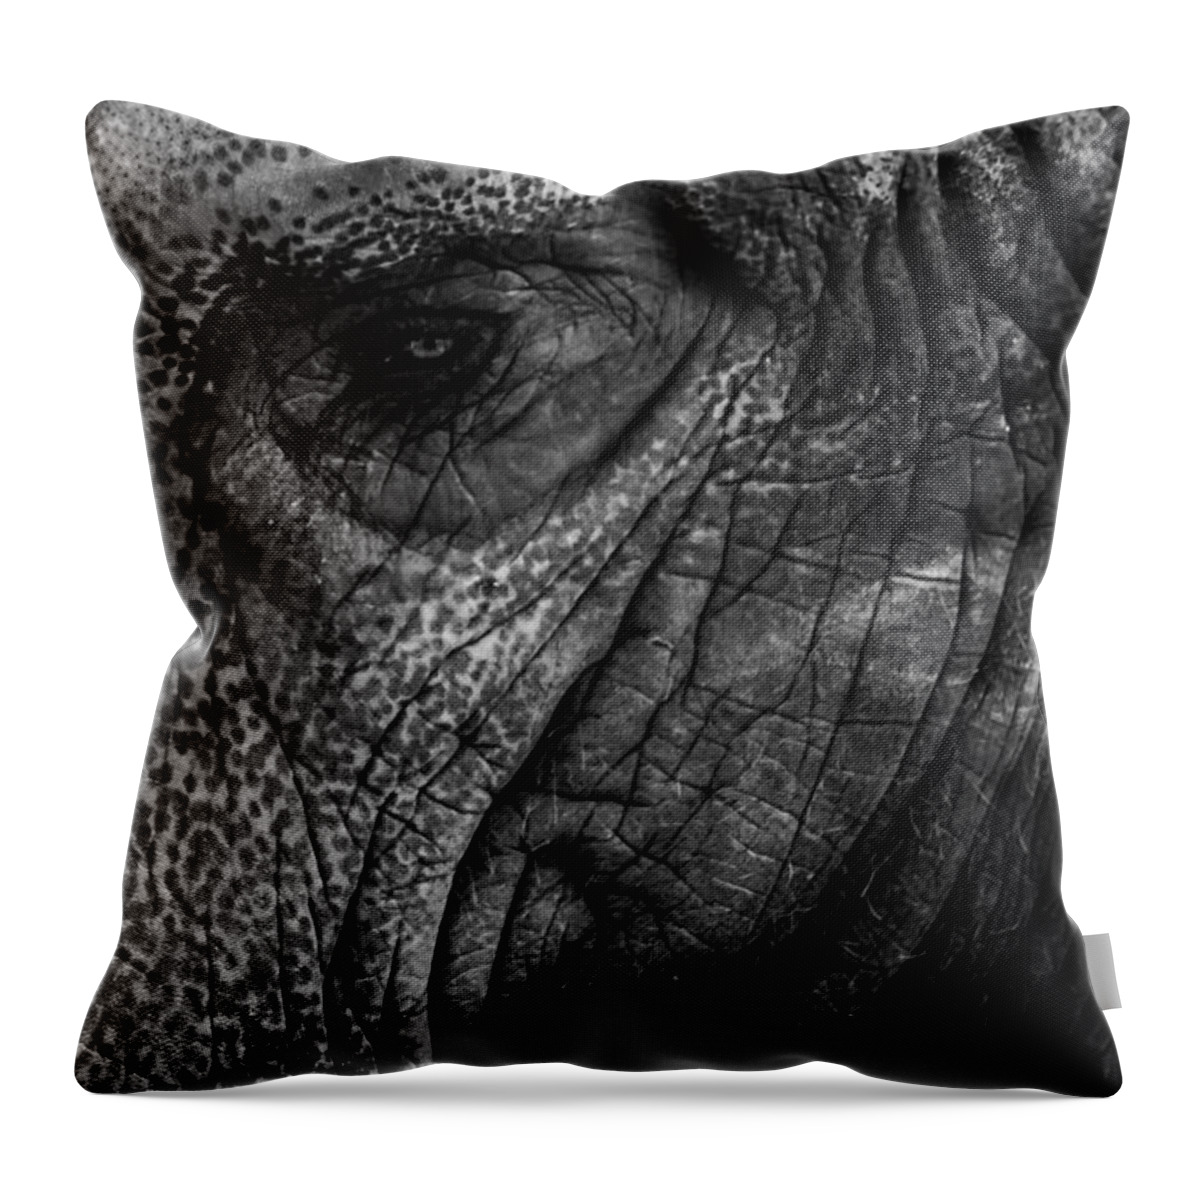 Cincinnati Throw Pillow featuring the photograph Elephants Eye by Keith Allen